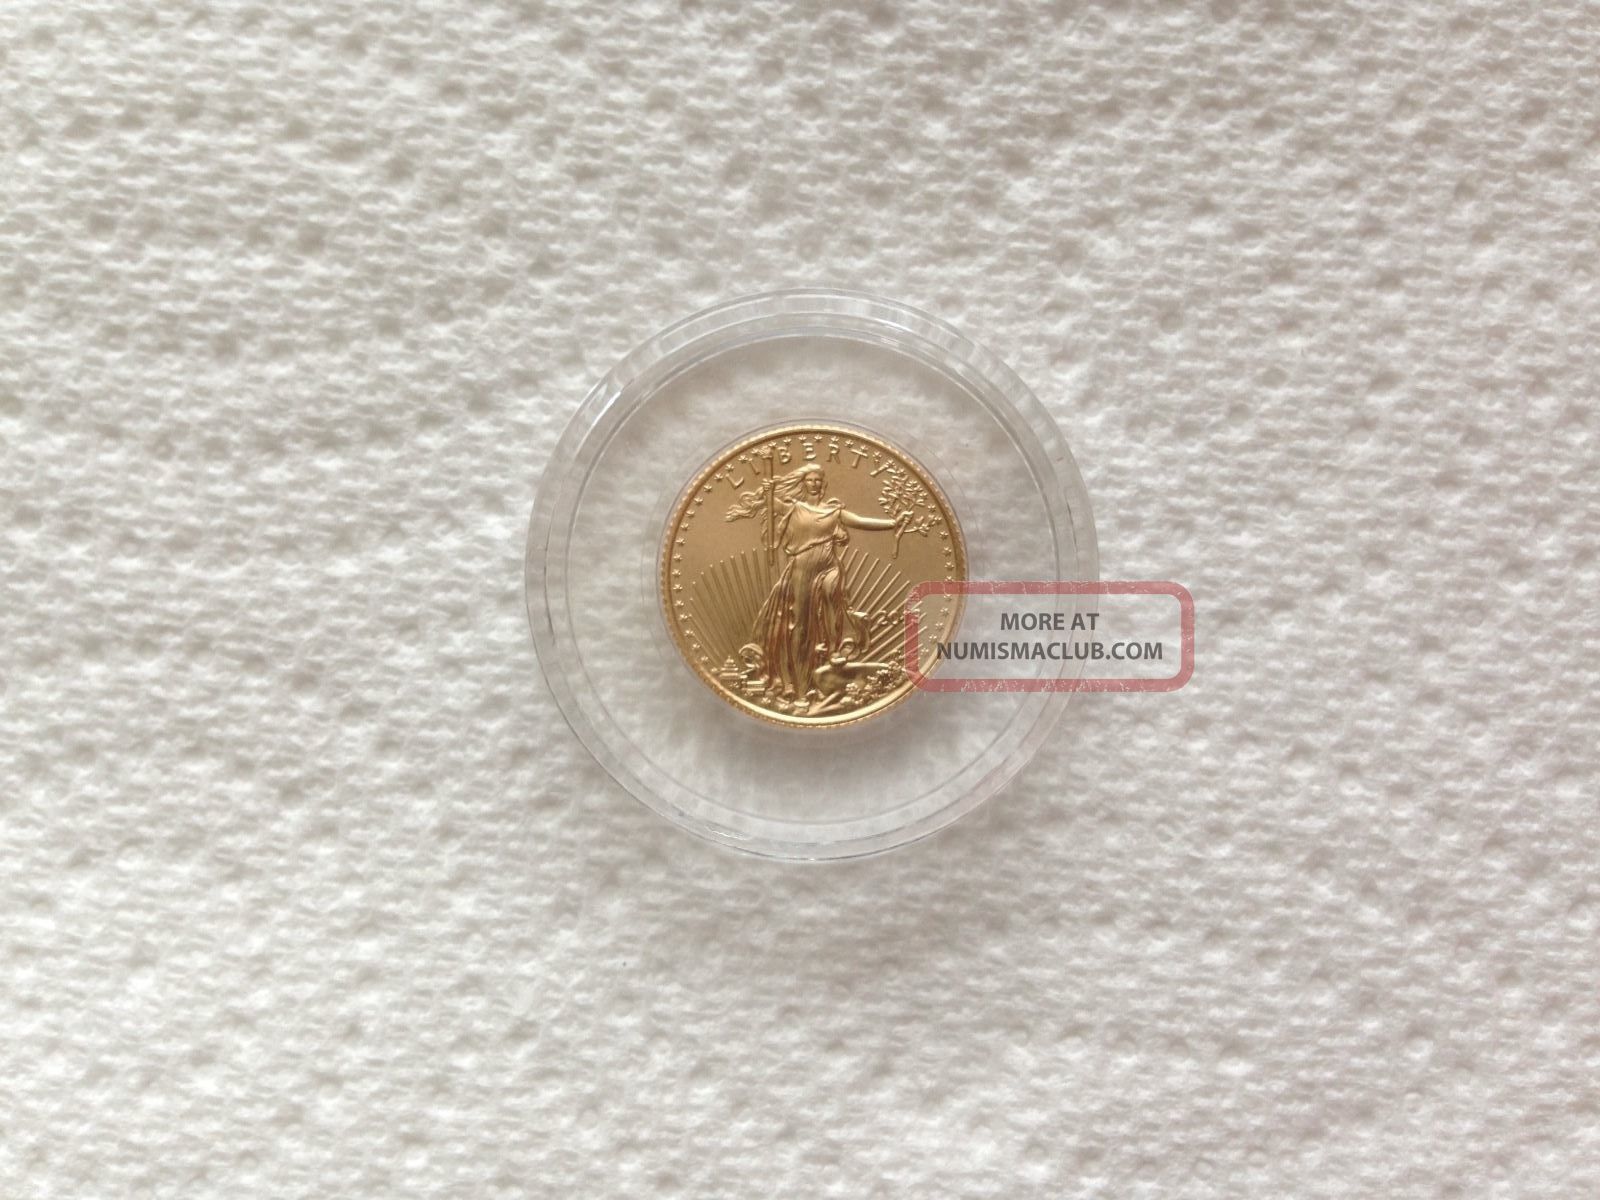 golden eagle coins bbb